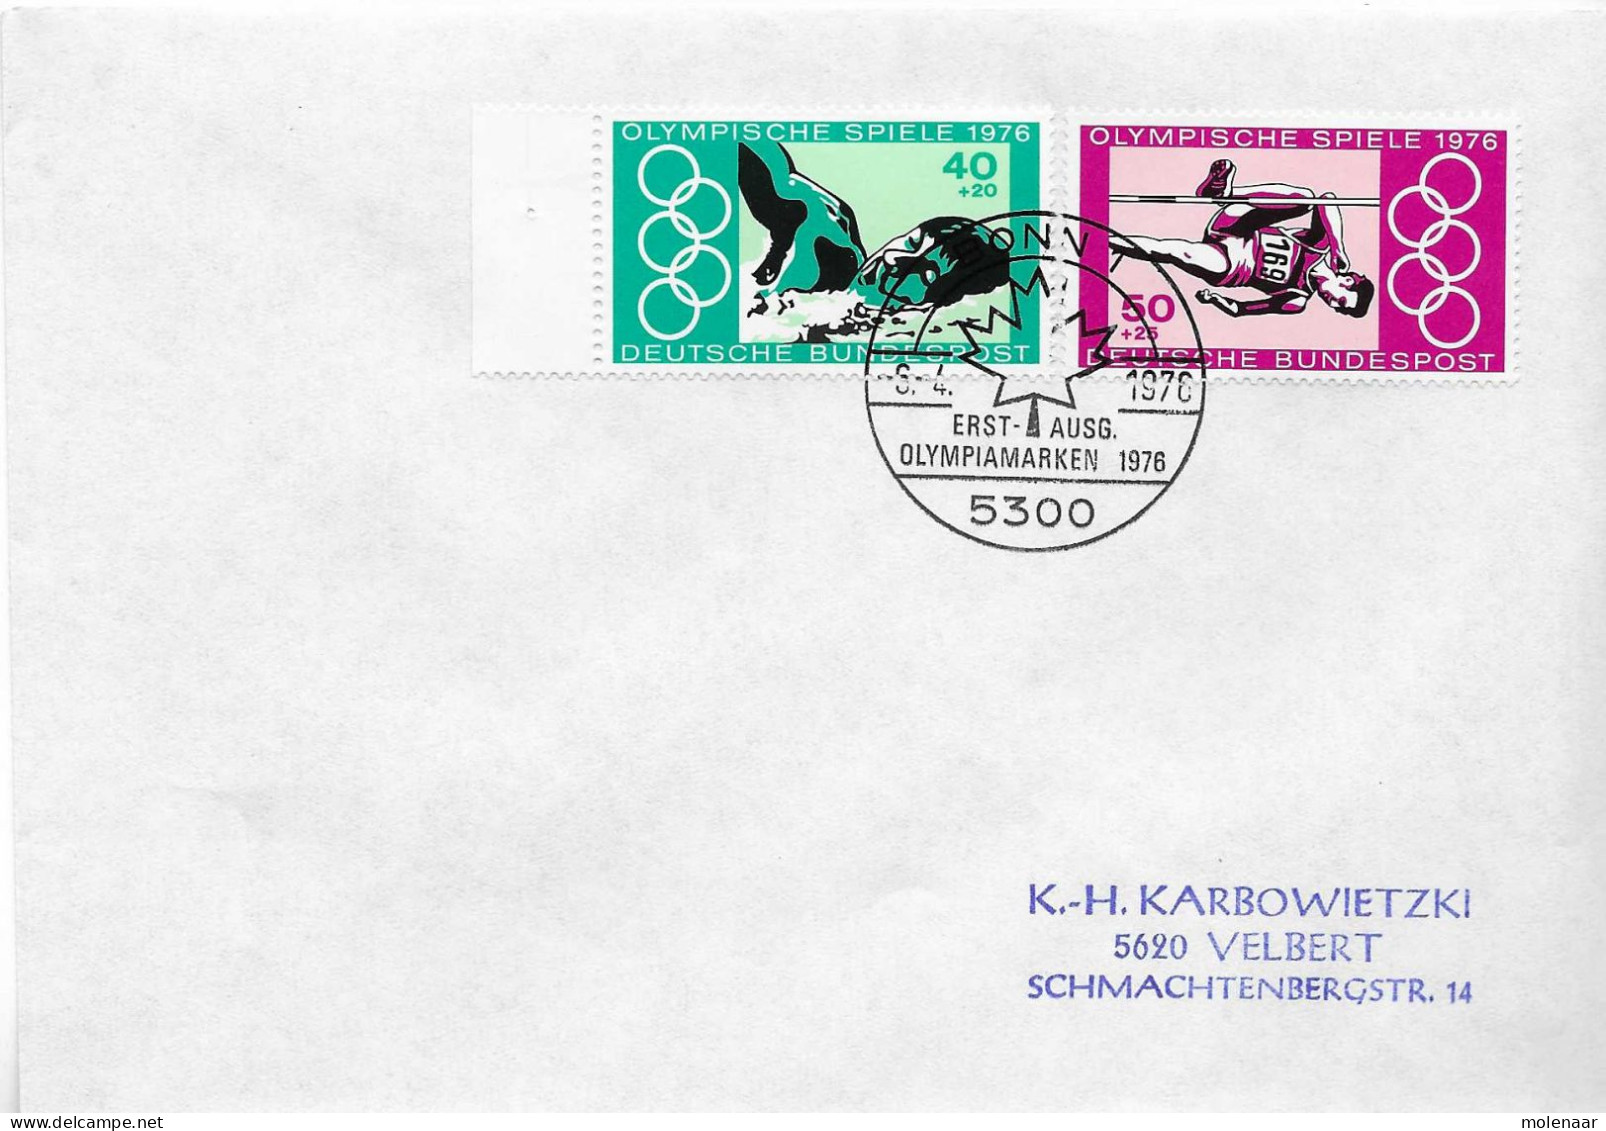 Postzegels > Europa > Duitsland > West-Duitsland > 1960-1969 > Brief  Met 886 En 887 (17351) - Covers & Documents